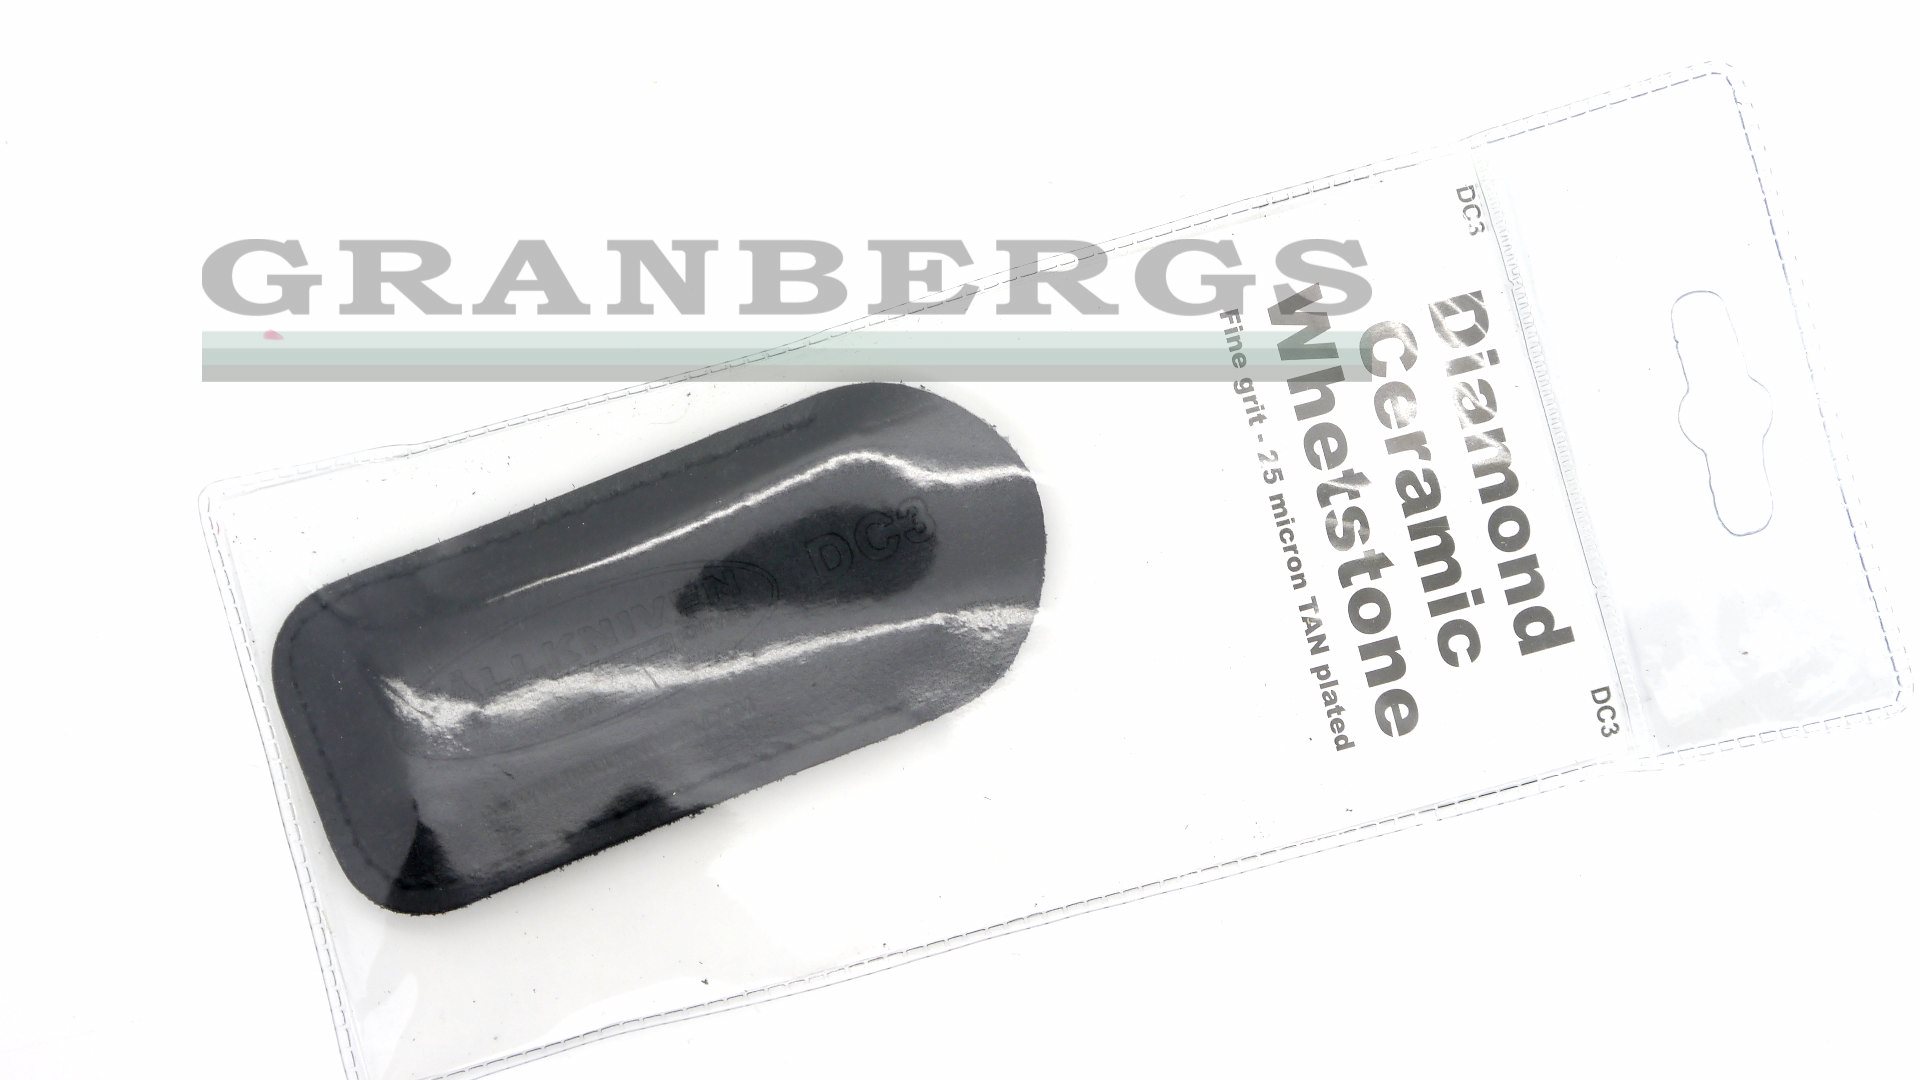 https://granbergs.com.au/getattachment/Products/Knives-Outdoors/Fallkniven-DC3-Diamond-Ceramic-Knife-Sharpener/P1110661Fallkniven-DC3-Diamond-Sharpener-1920p-Watermark.jpg.aspx